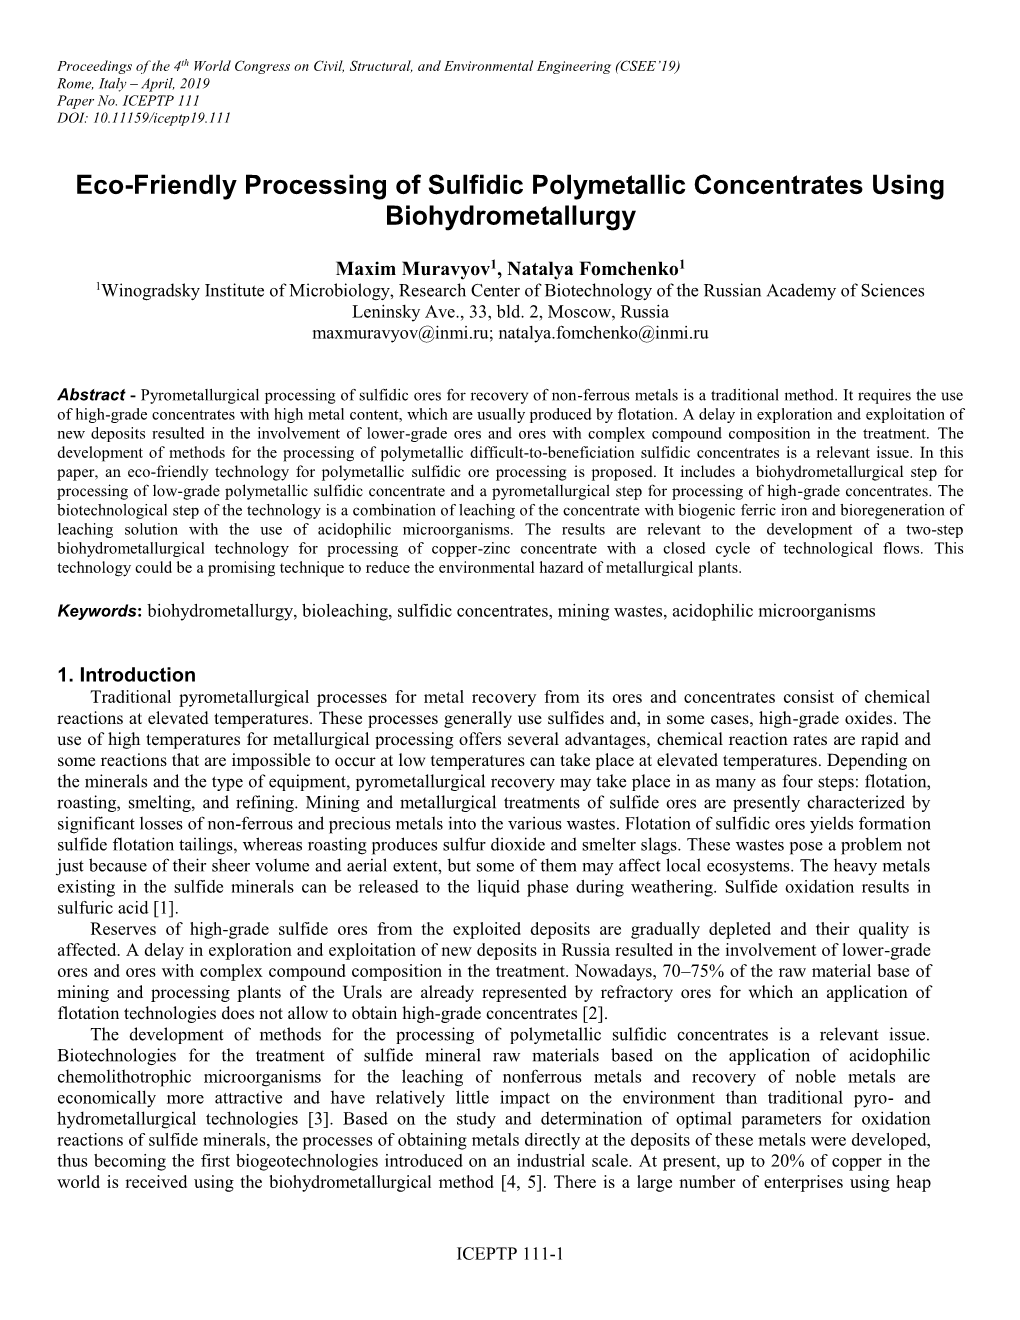 Eco-Friendly Processing of Sulfidic Polymetallic Concentrates Using Biohydrometallurgy